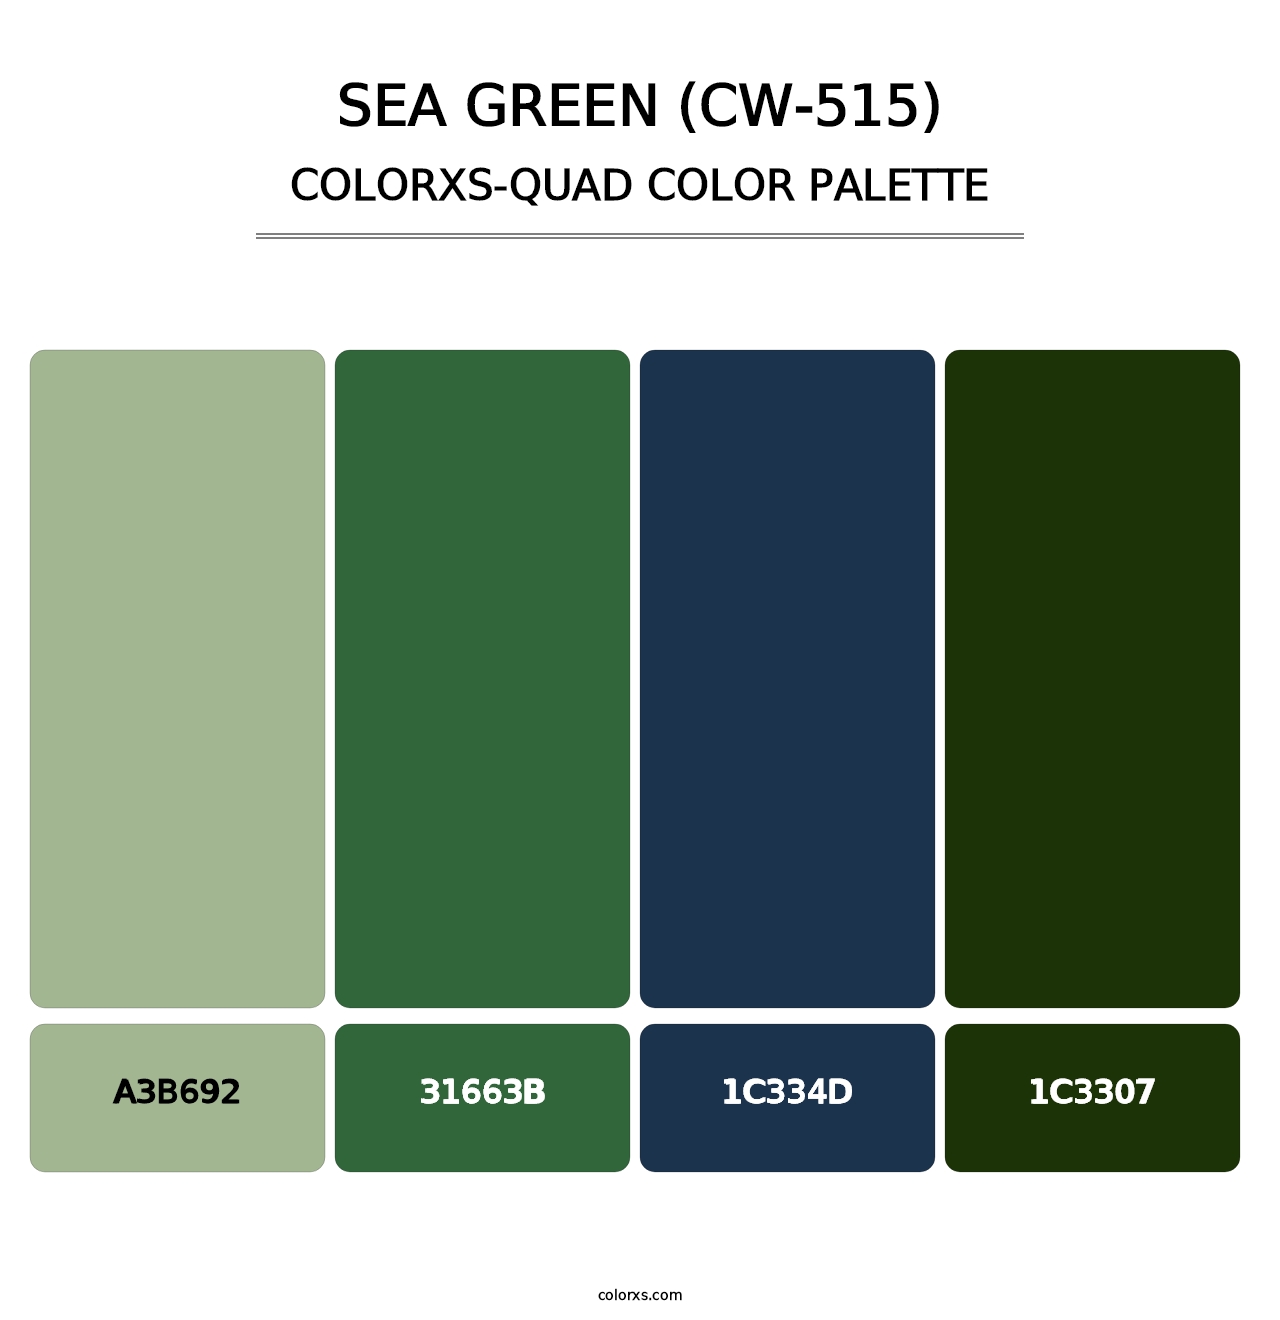 Sea Green (CW-515) - Colorxs Quad Palette